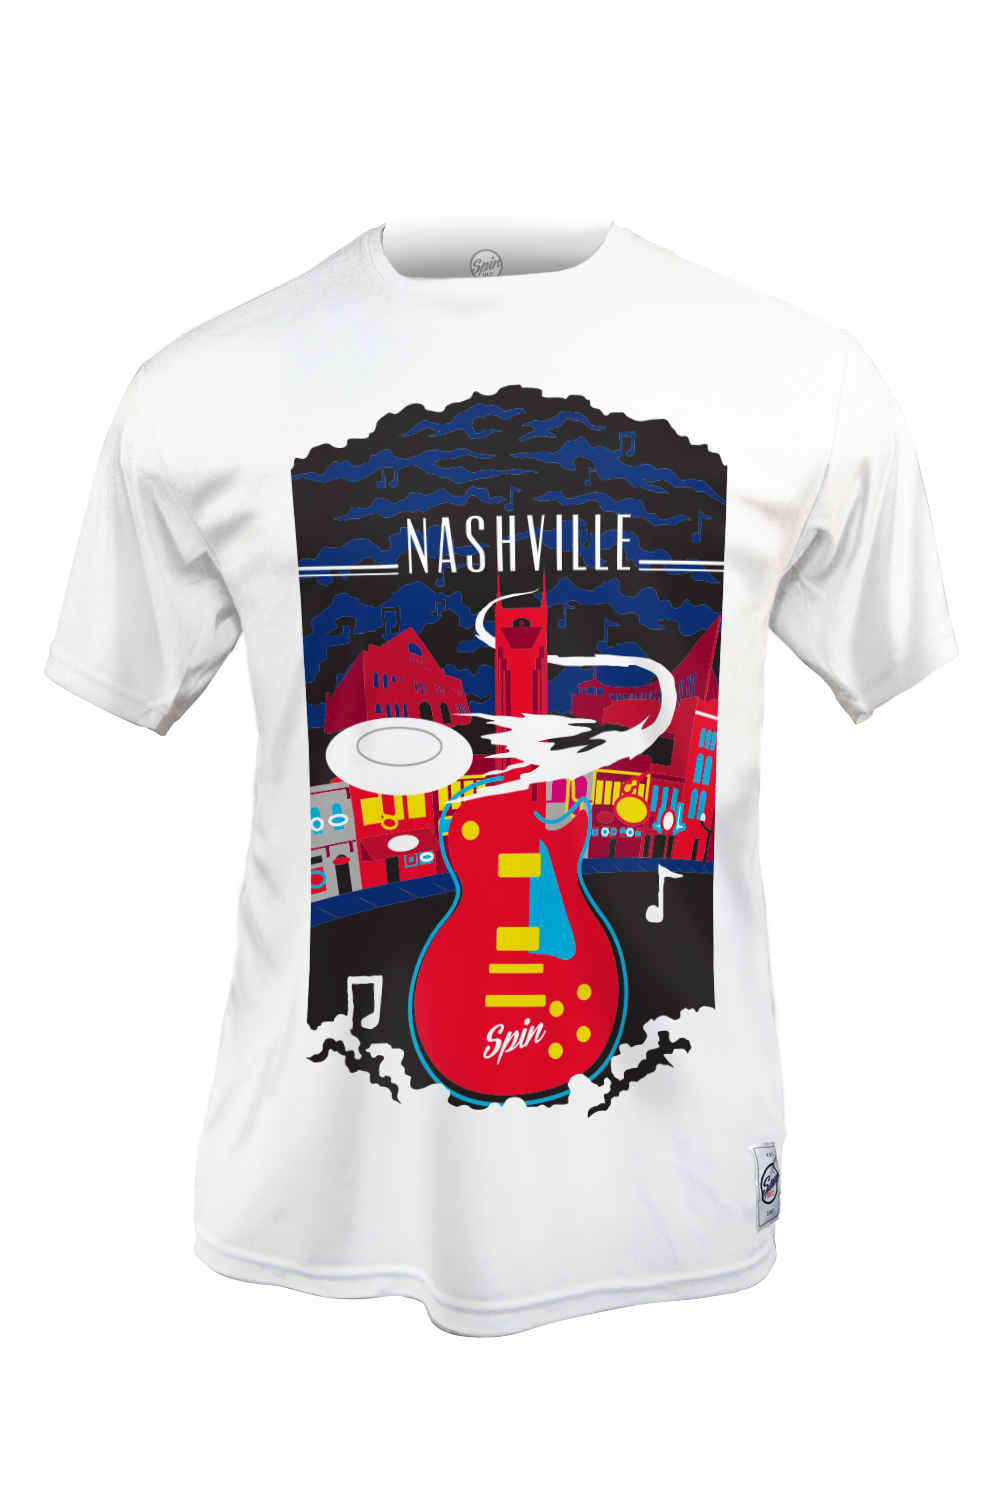 Nashville Short Sleeve Jersey